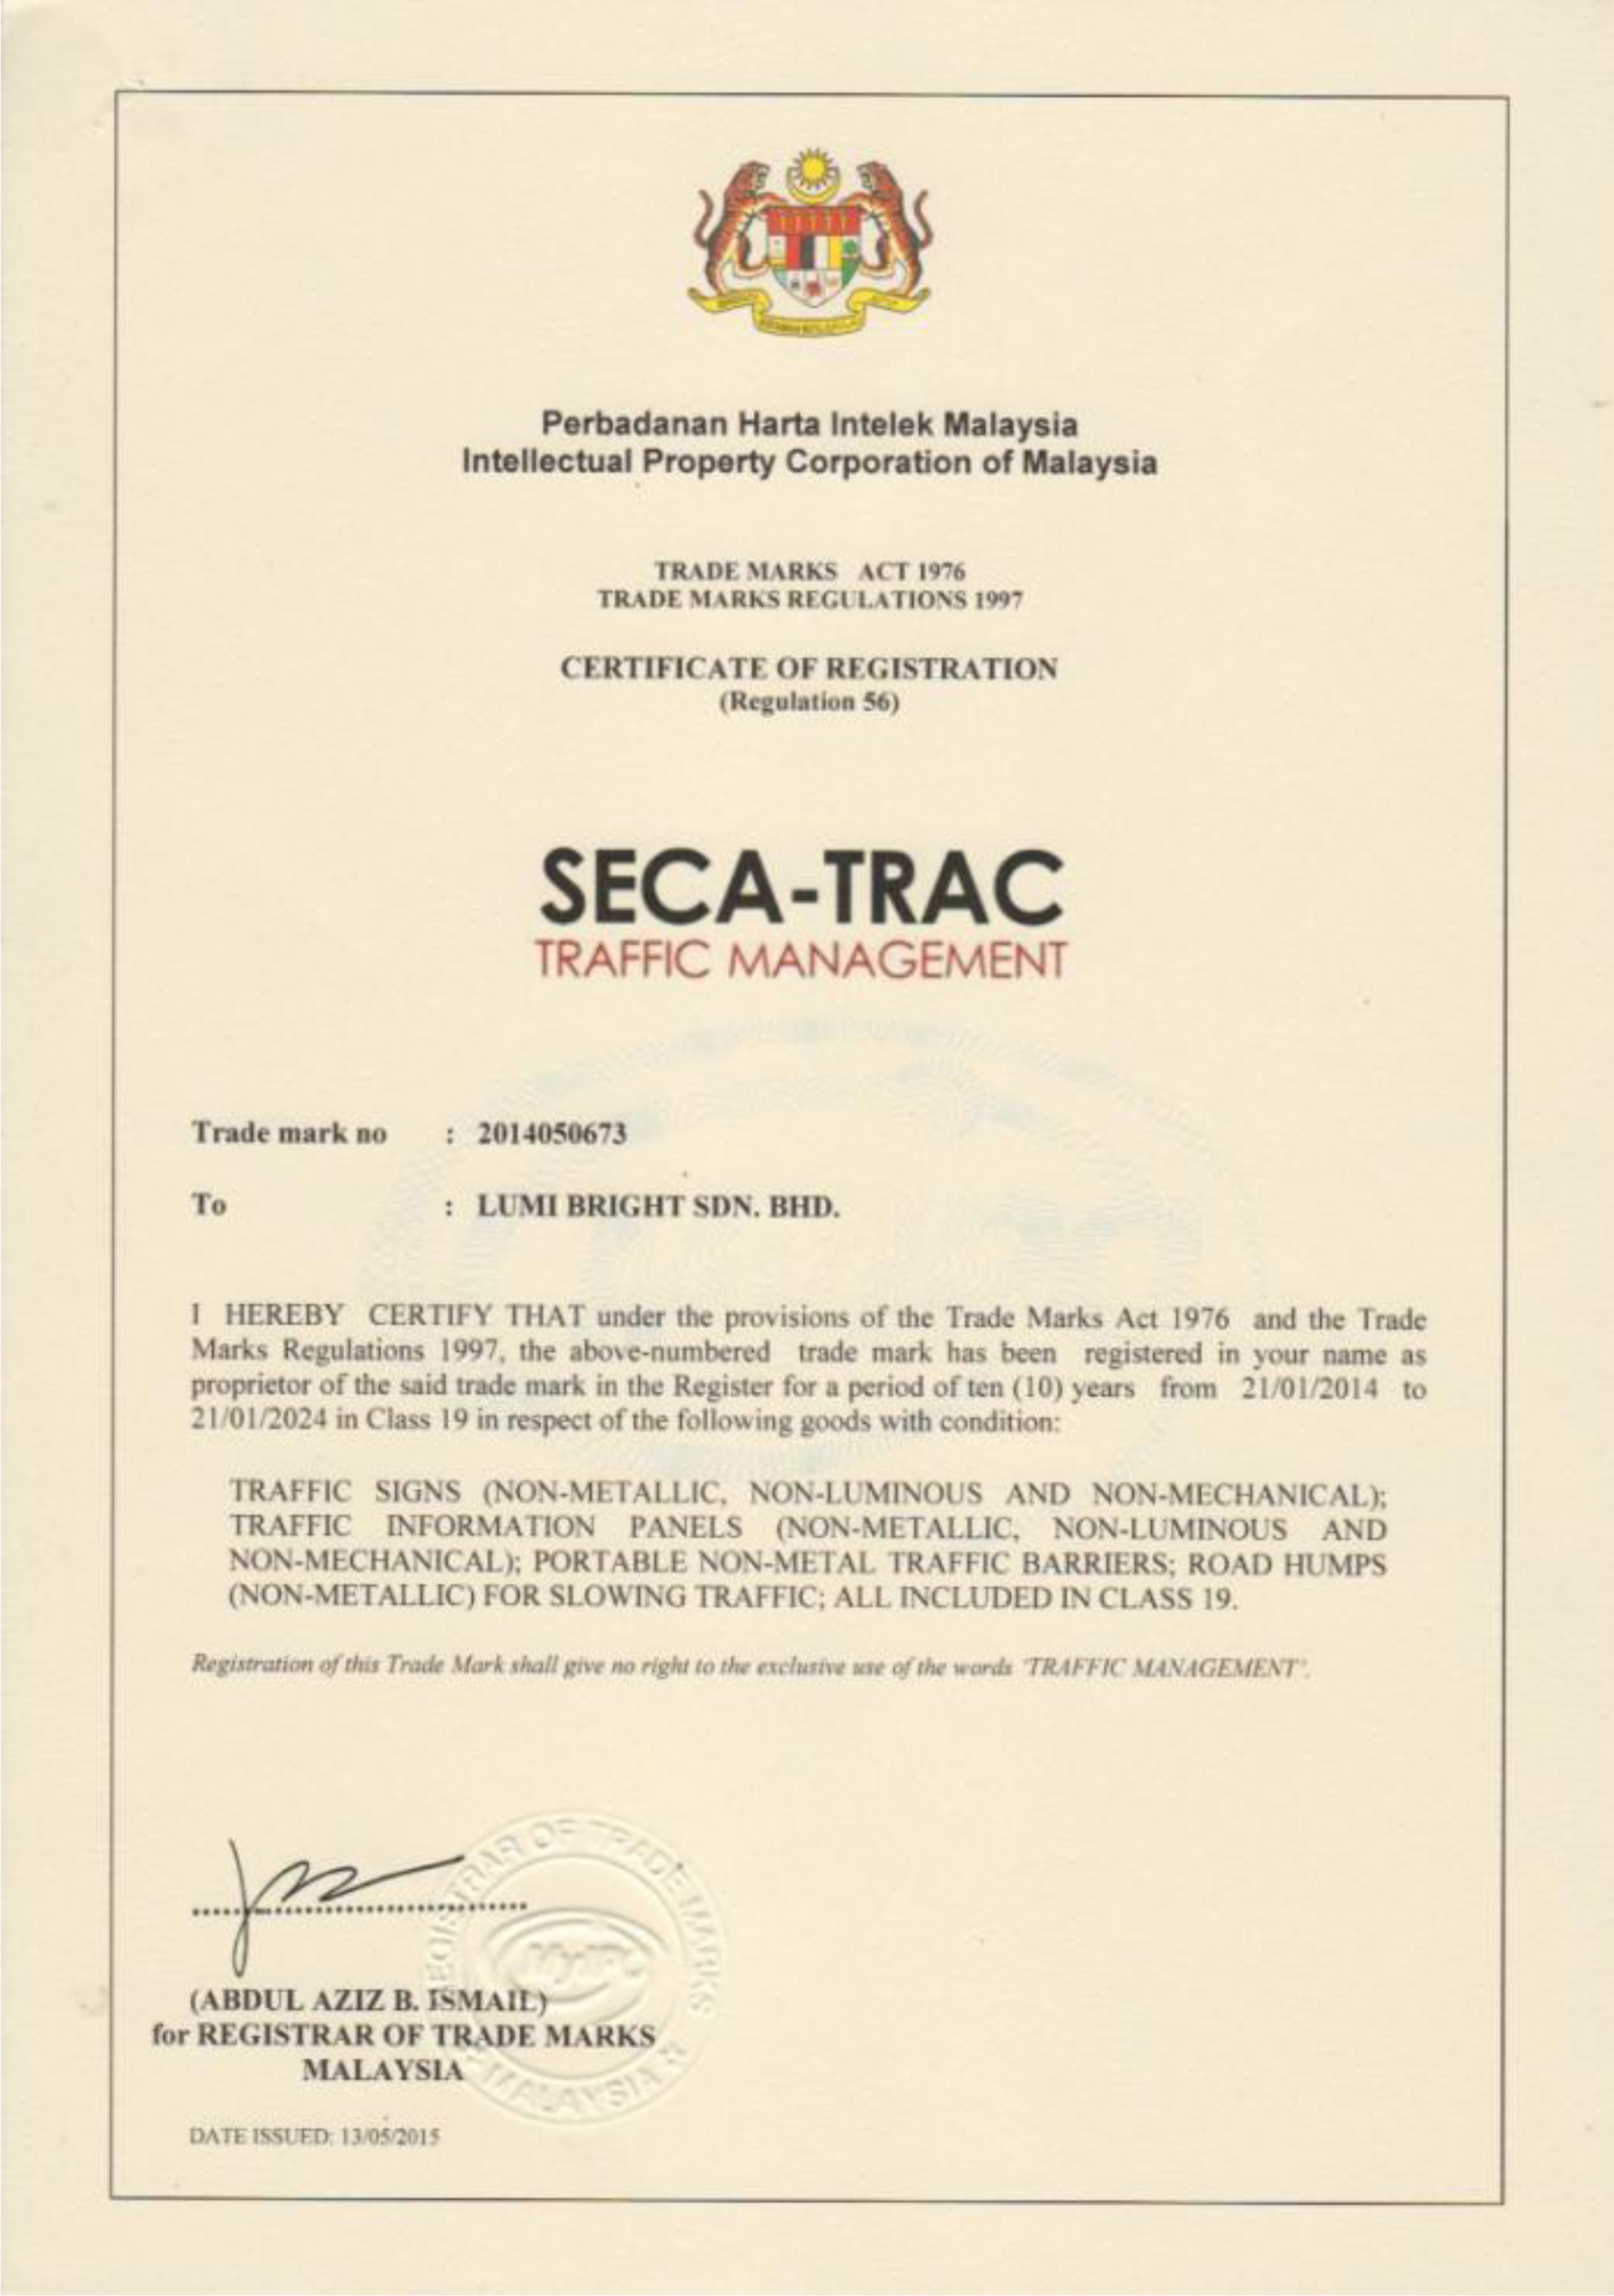 Registration of SECA-TRAC